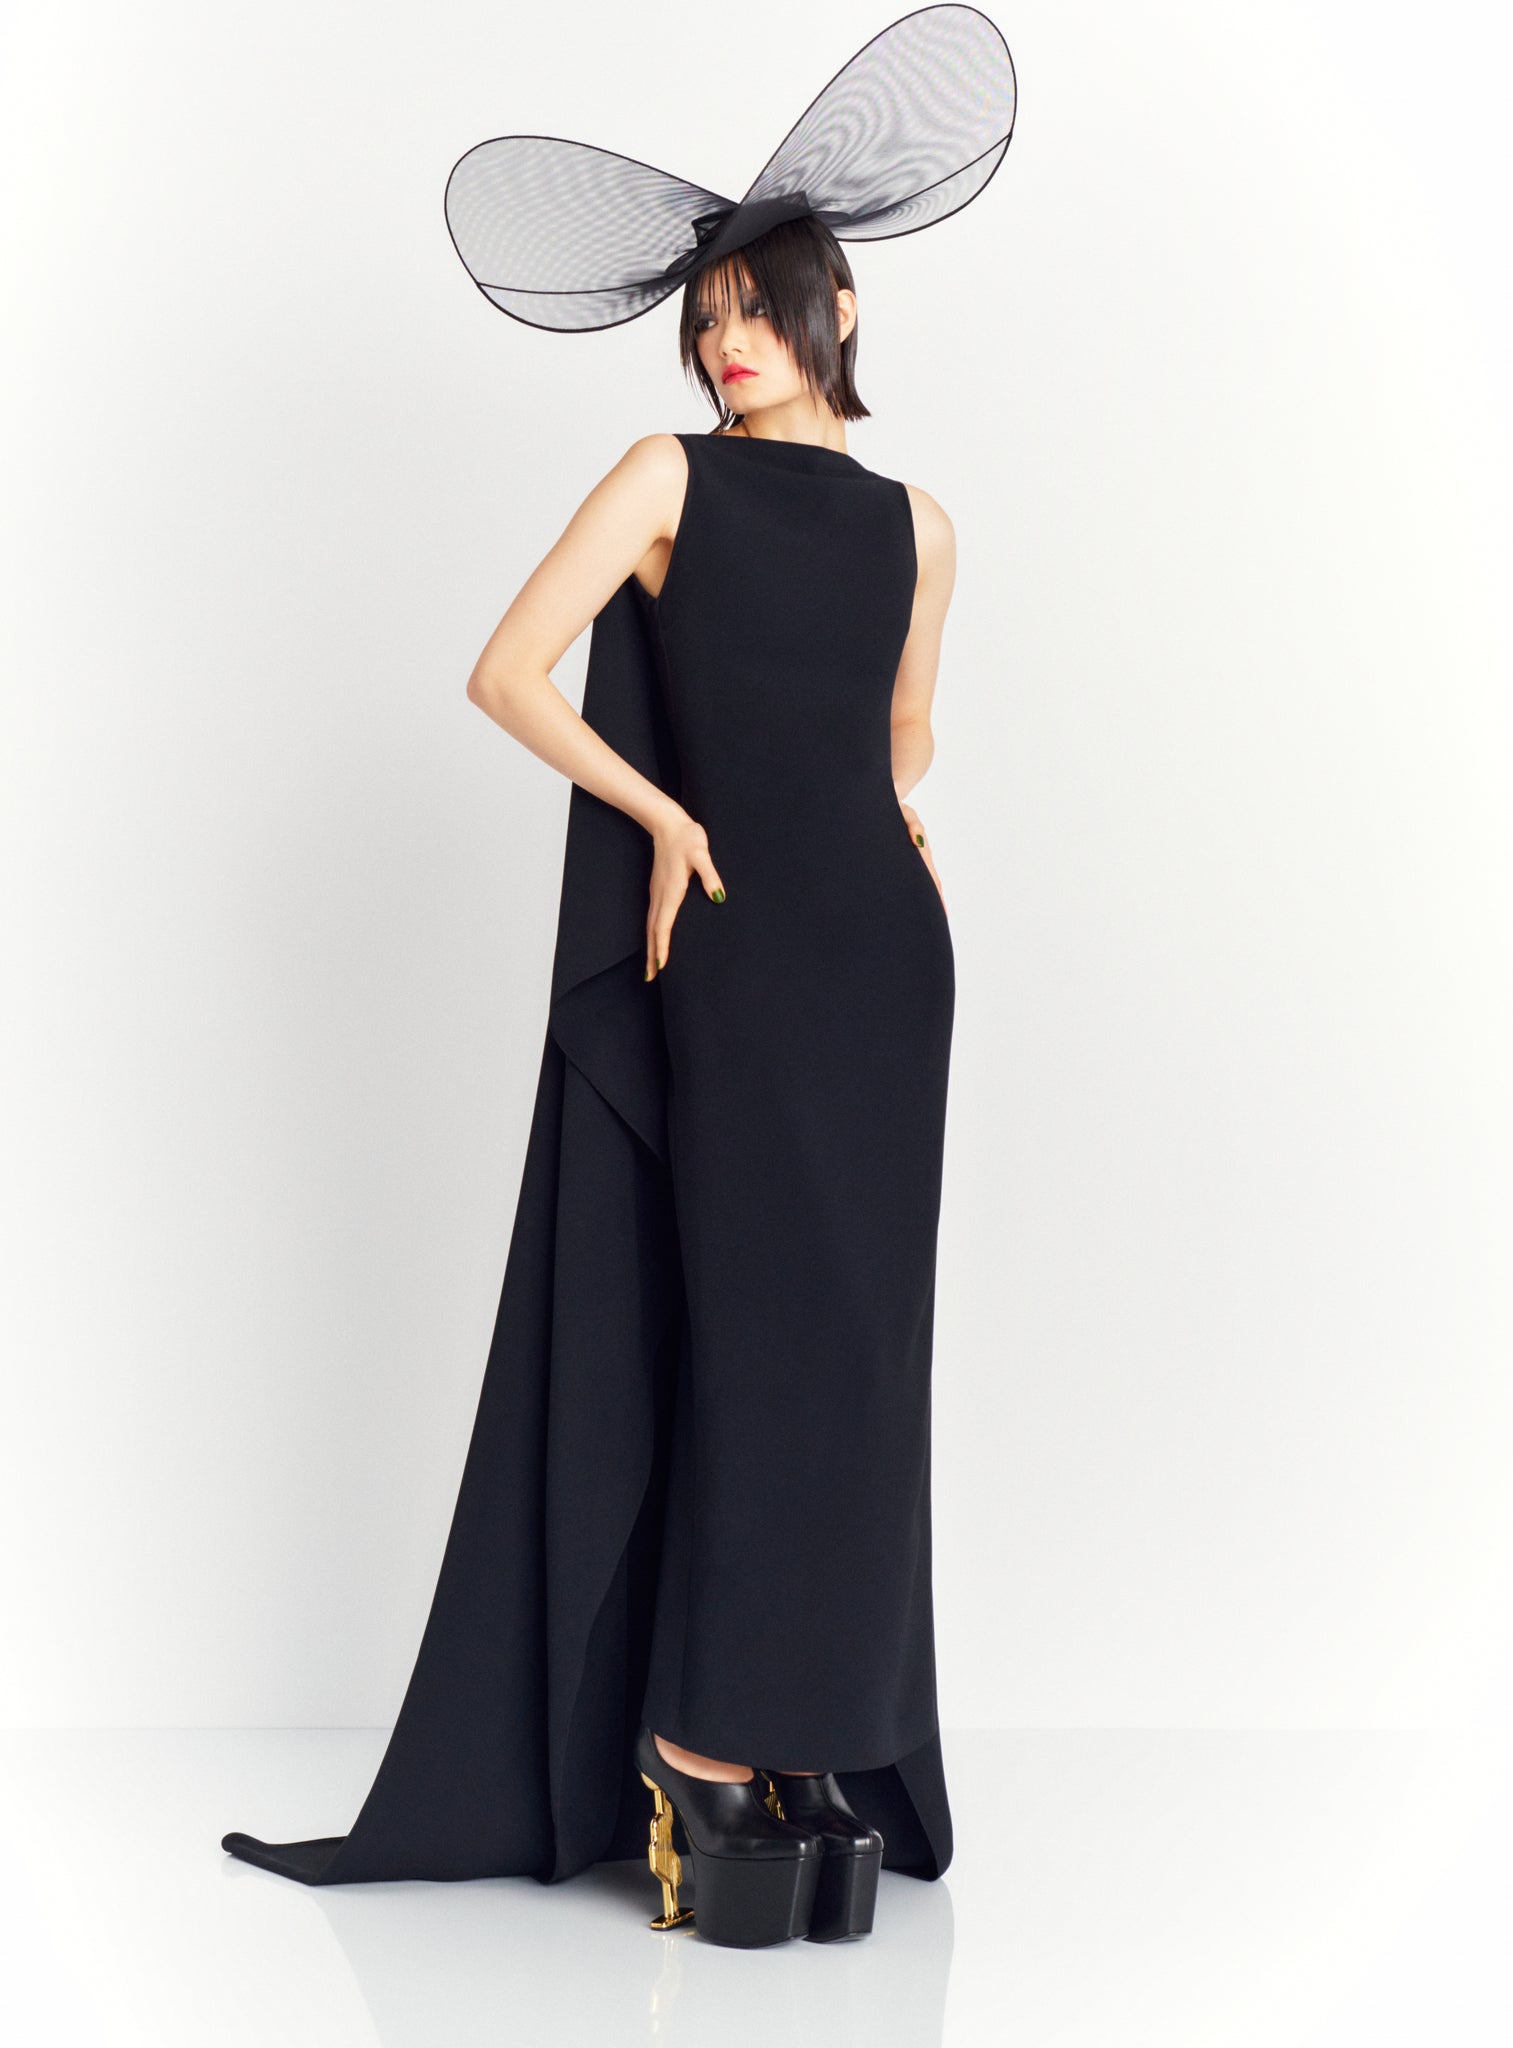 The Kaila Maxi Dress in Black